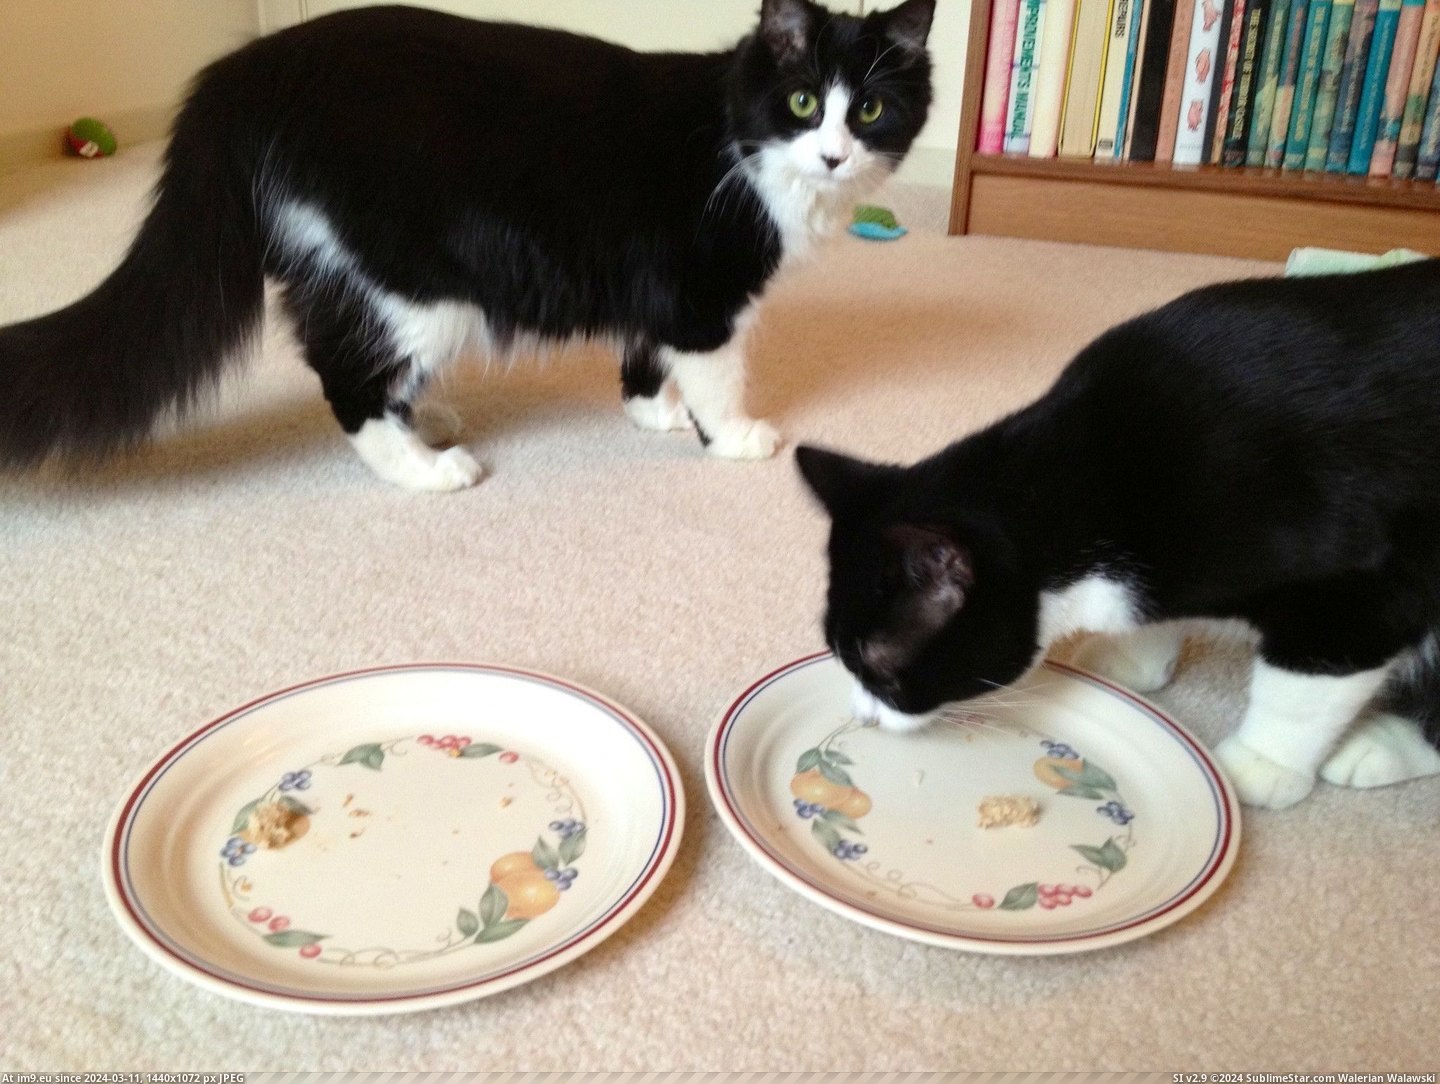 #Cats #Two #Happy #Feast #Catsgiving #Enjoying #Thanksgiving #Kitties [Cats] Just two kitties enjoying a Catsgiving feast. Happy Thanksgiving everyone! 2 Pic. (Bild von album My r/CATS favs))